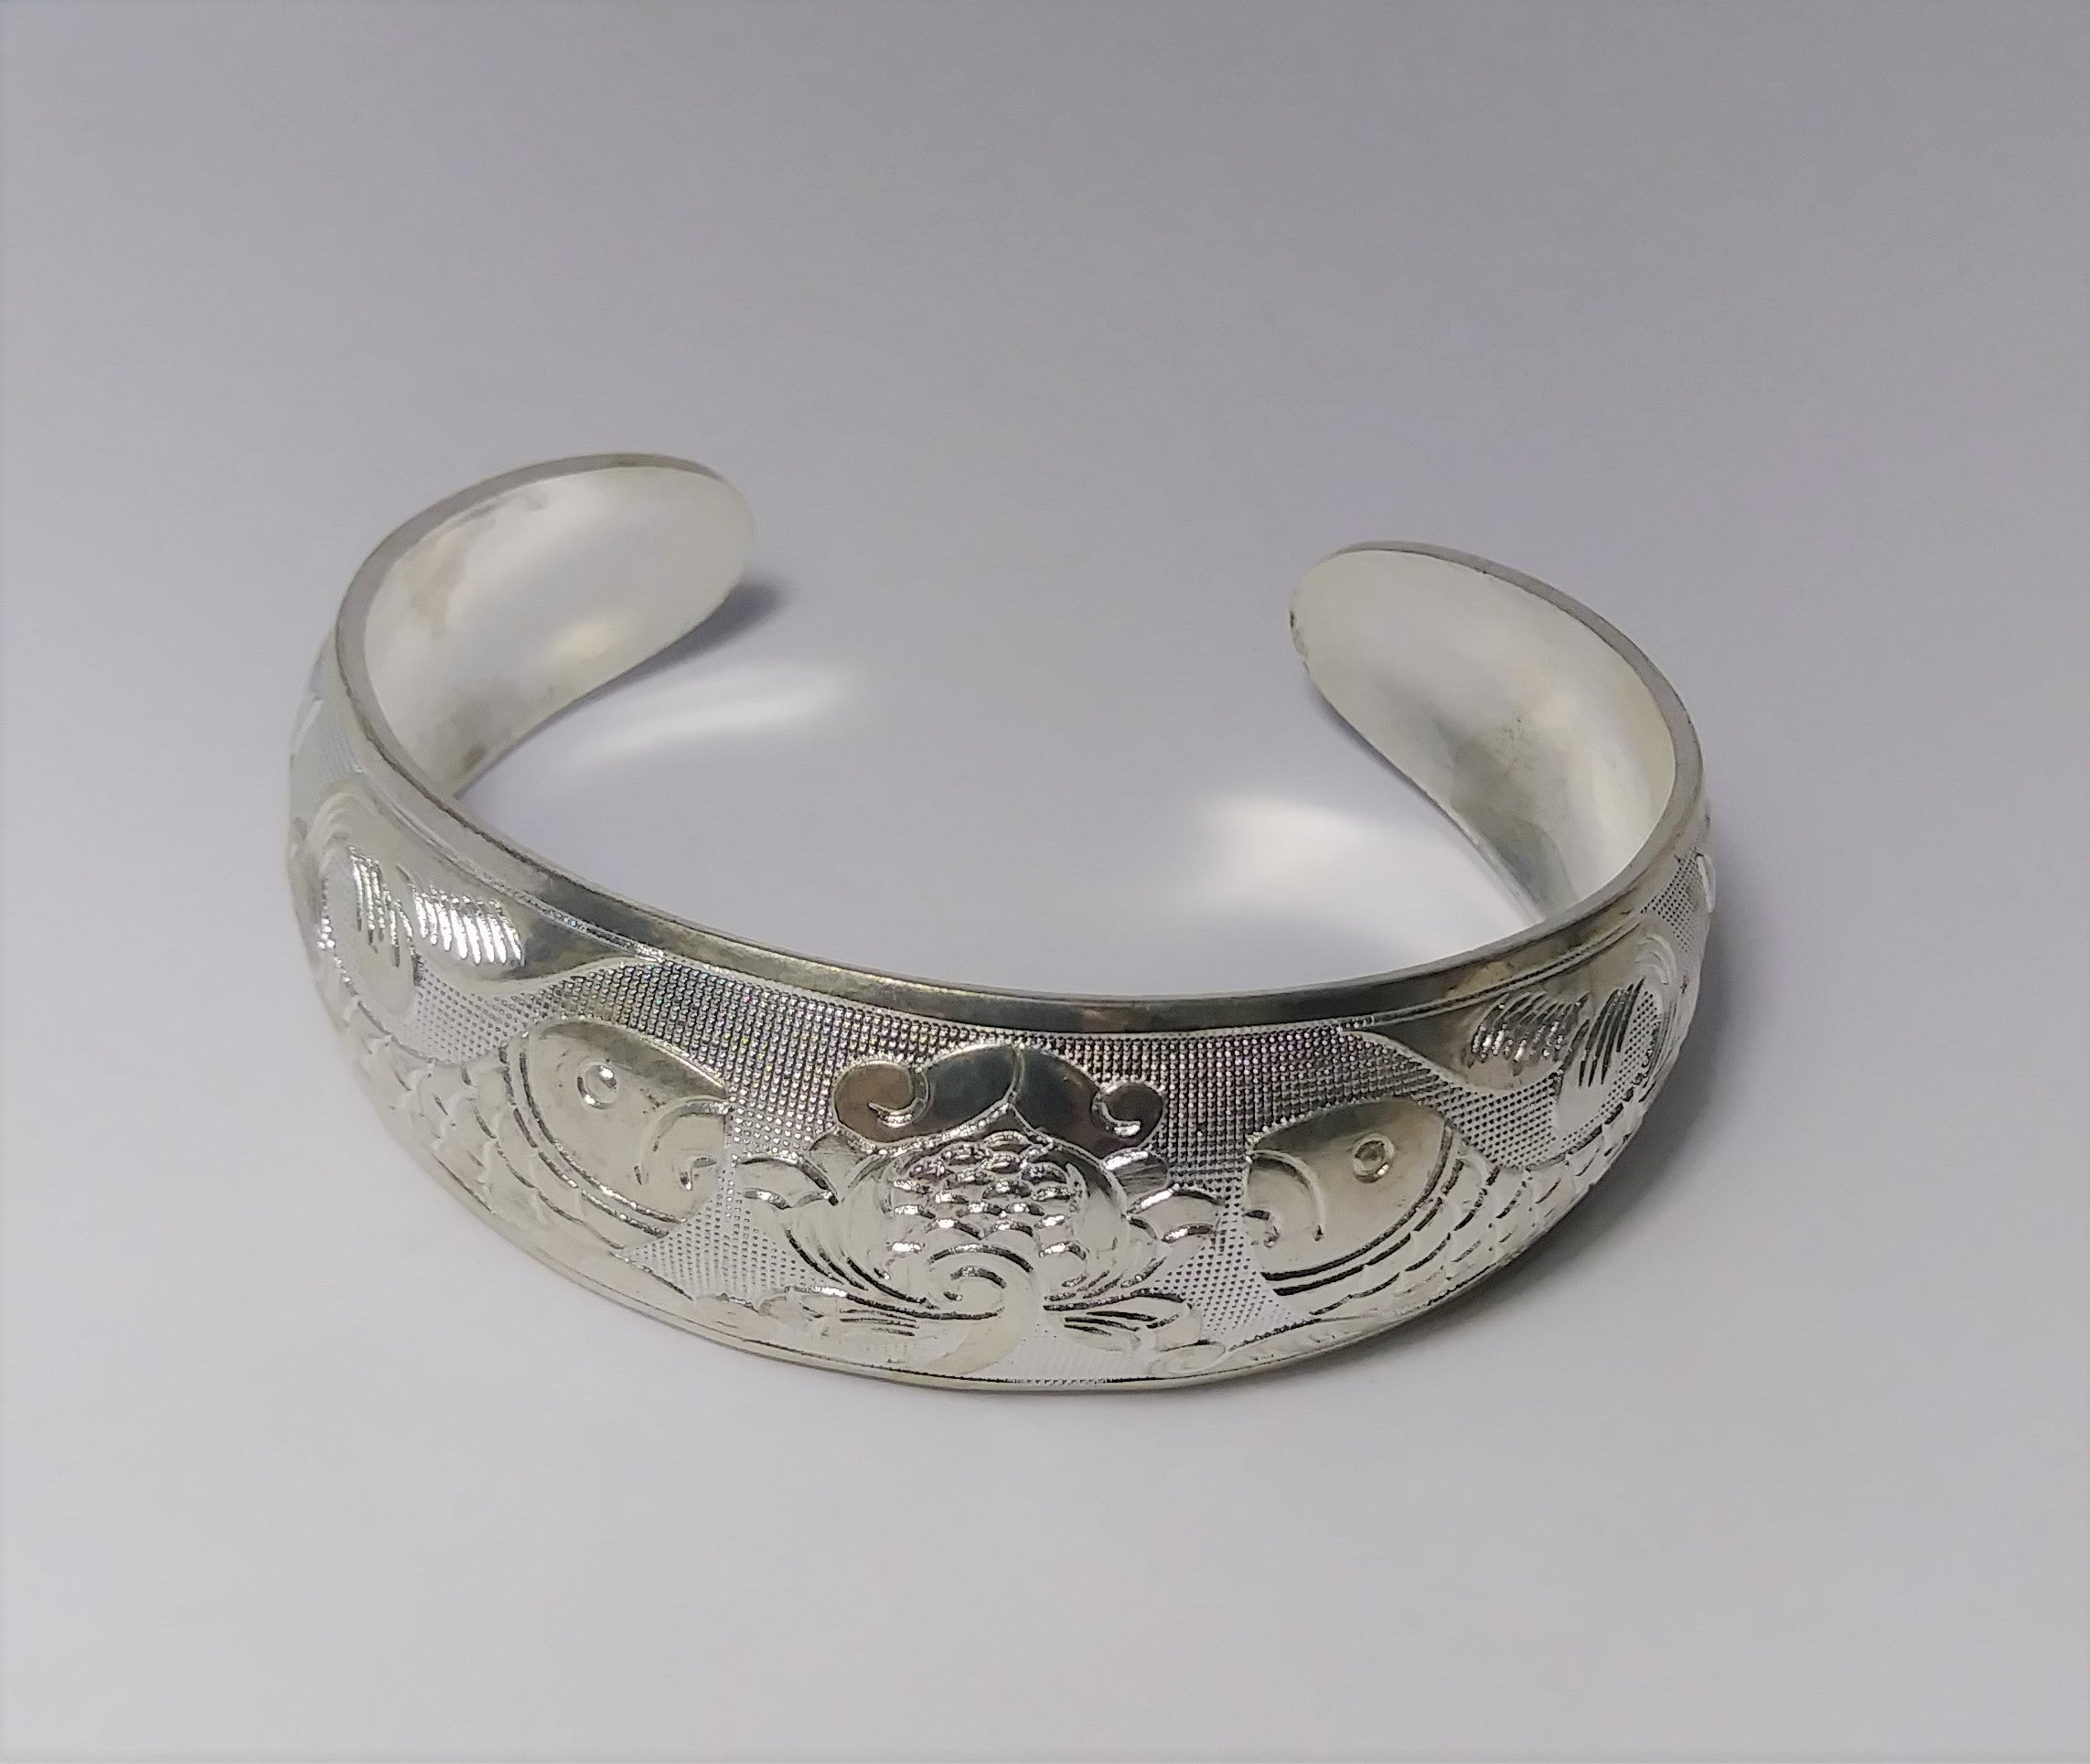 Precious Sterling silver artistic carved bangle